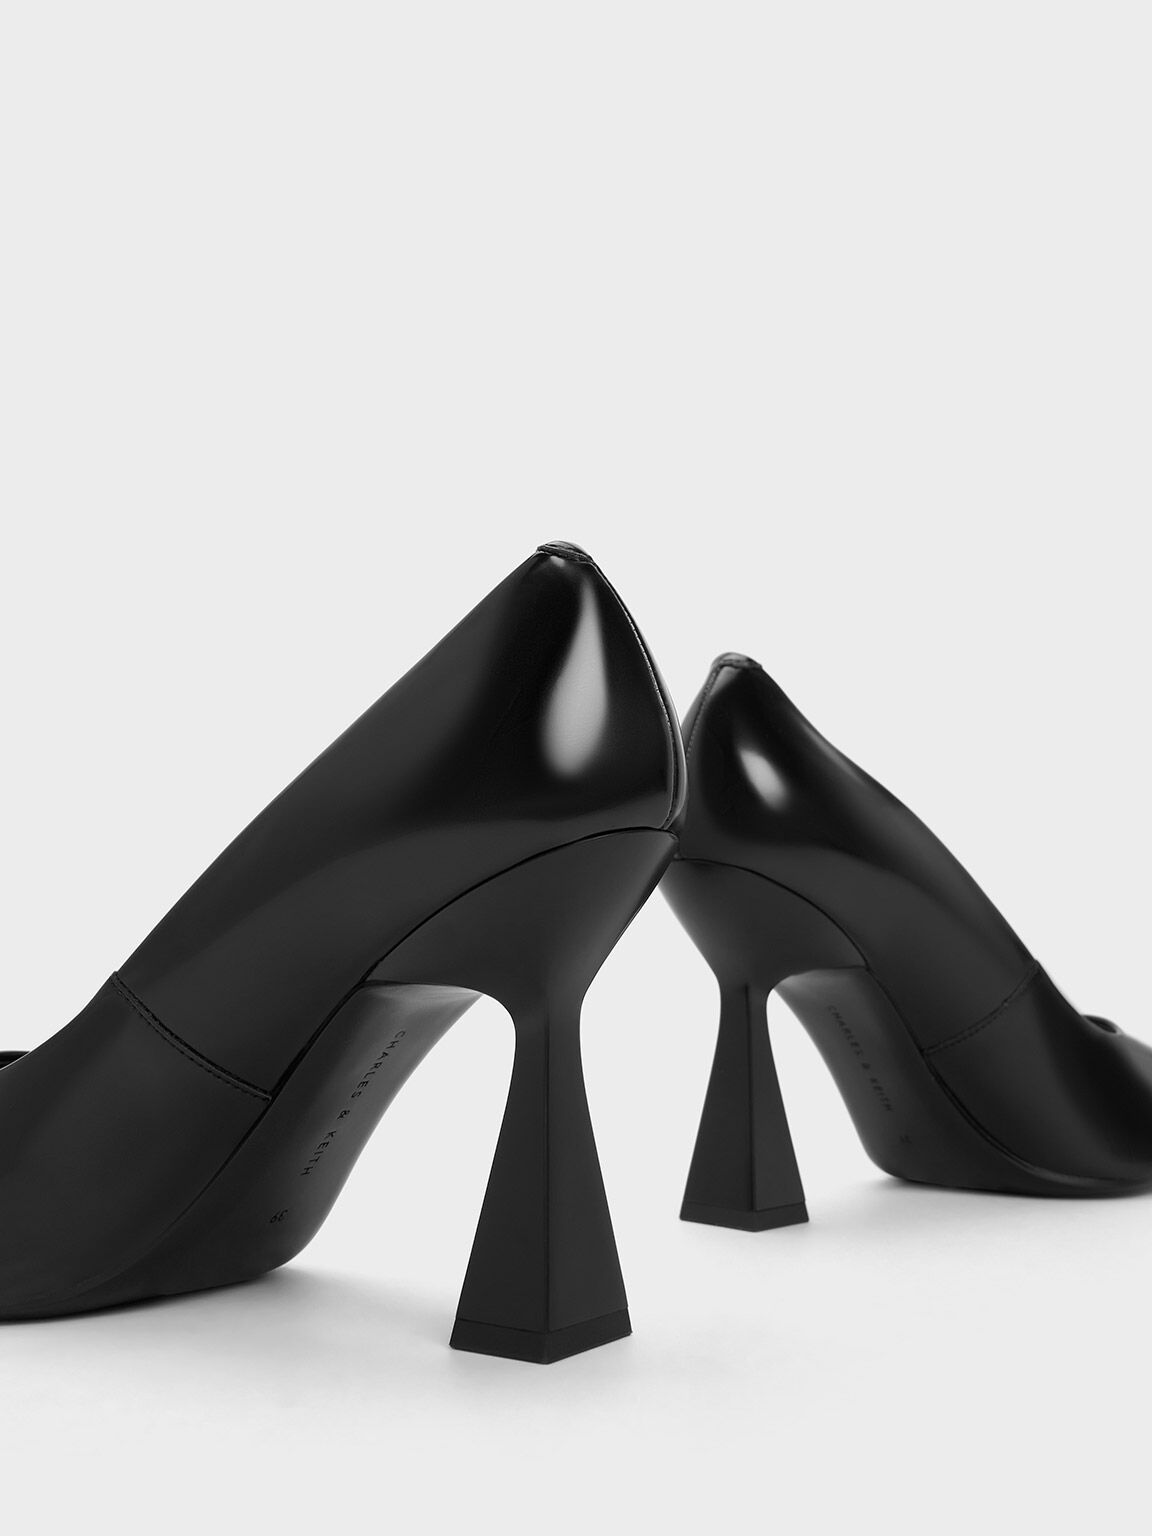 Charles and Keith heels | Heels, Miu miu ballet flats, Black suede